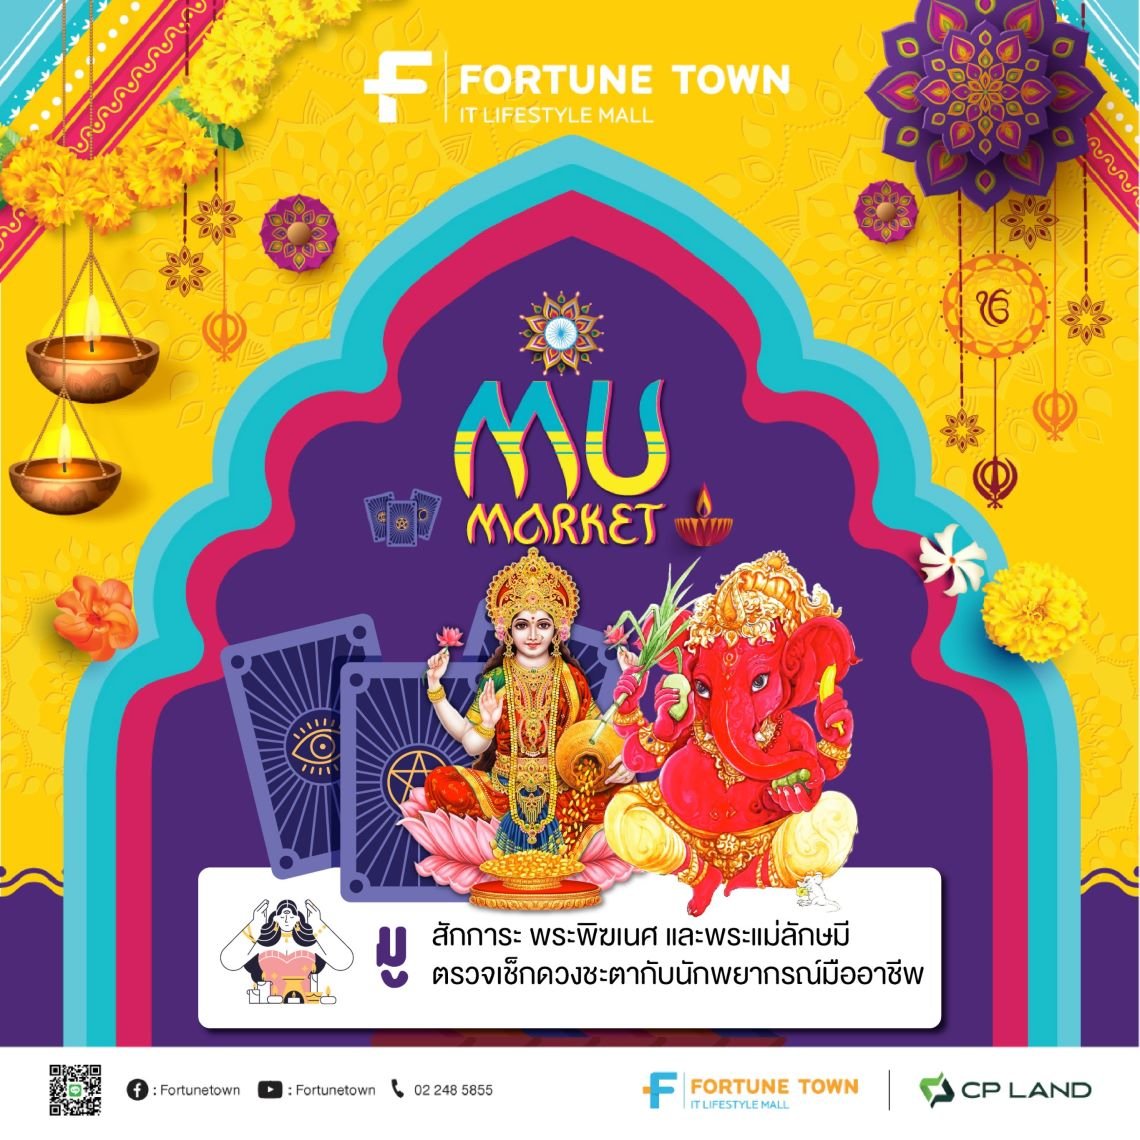 Fortune Town เอาใจสายมู  ช้อป ฟิน ชิม มู ครบจบในที่เดียว Mu Market